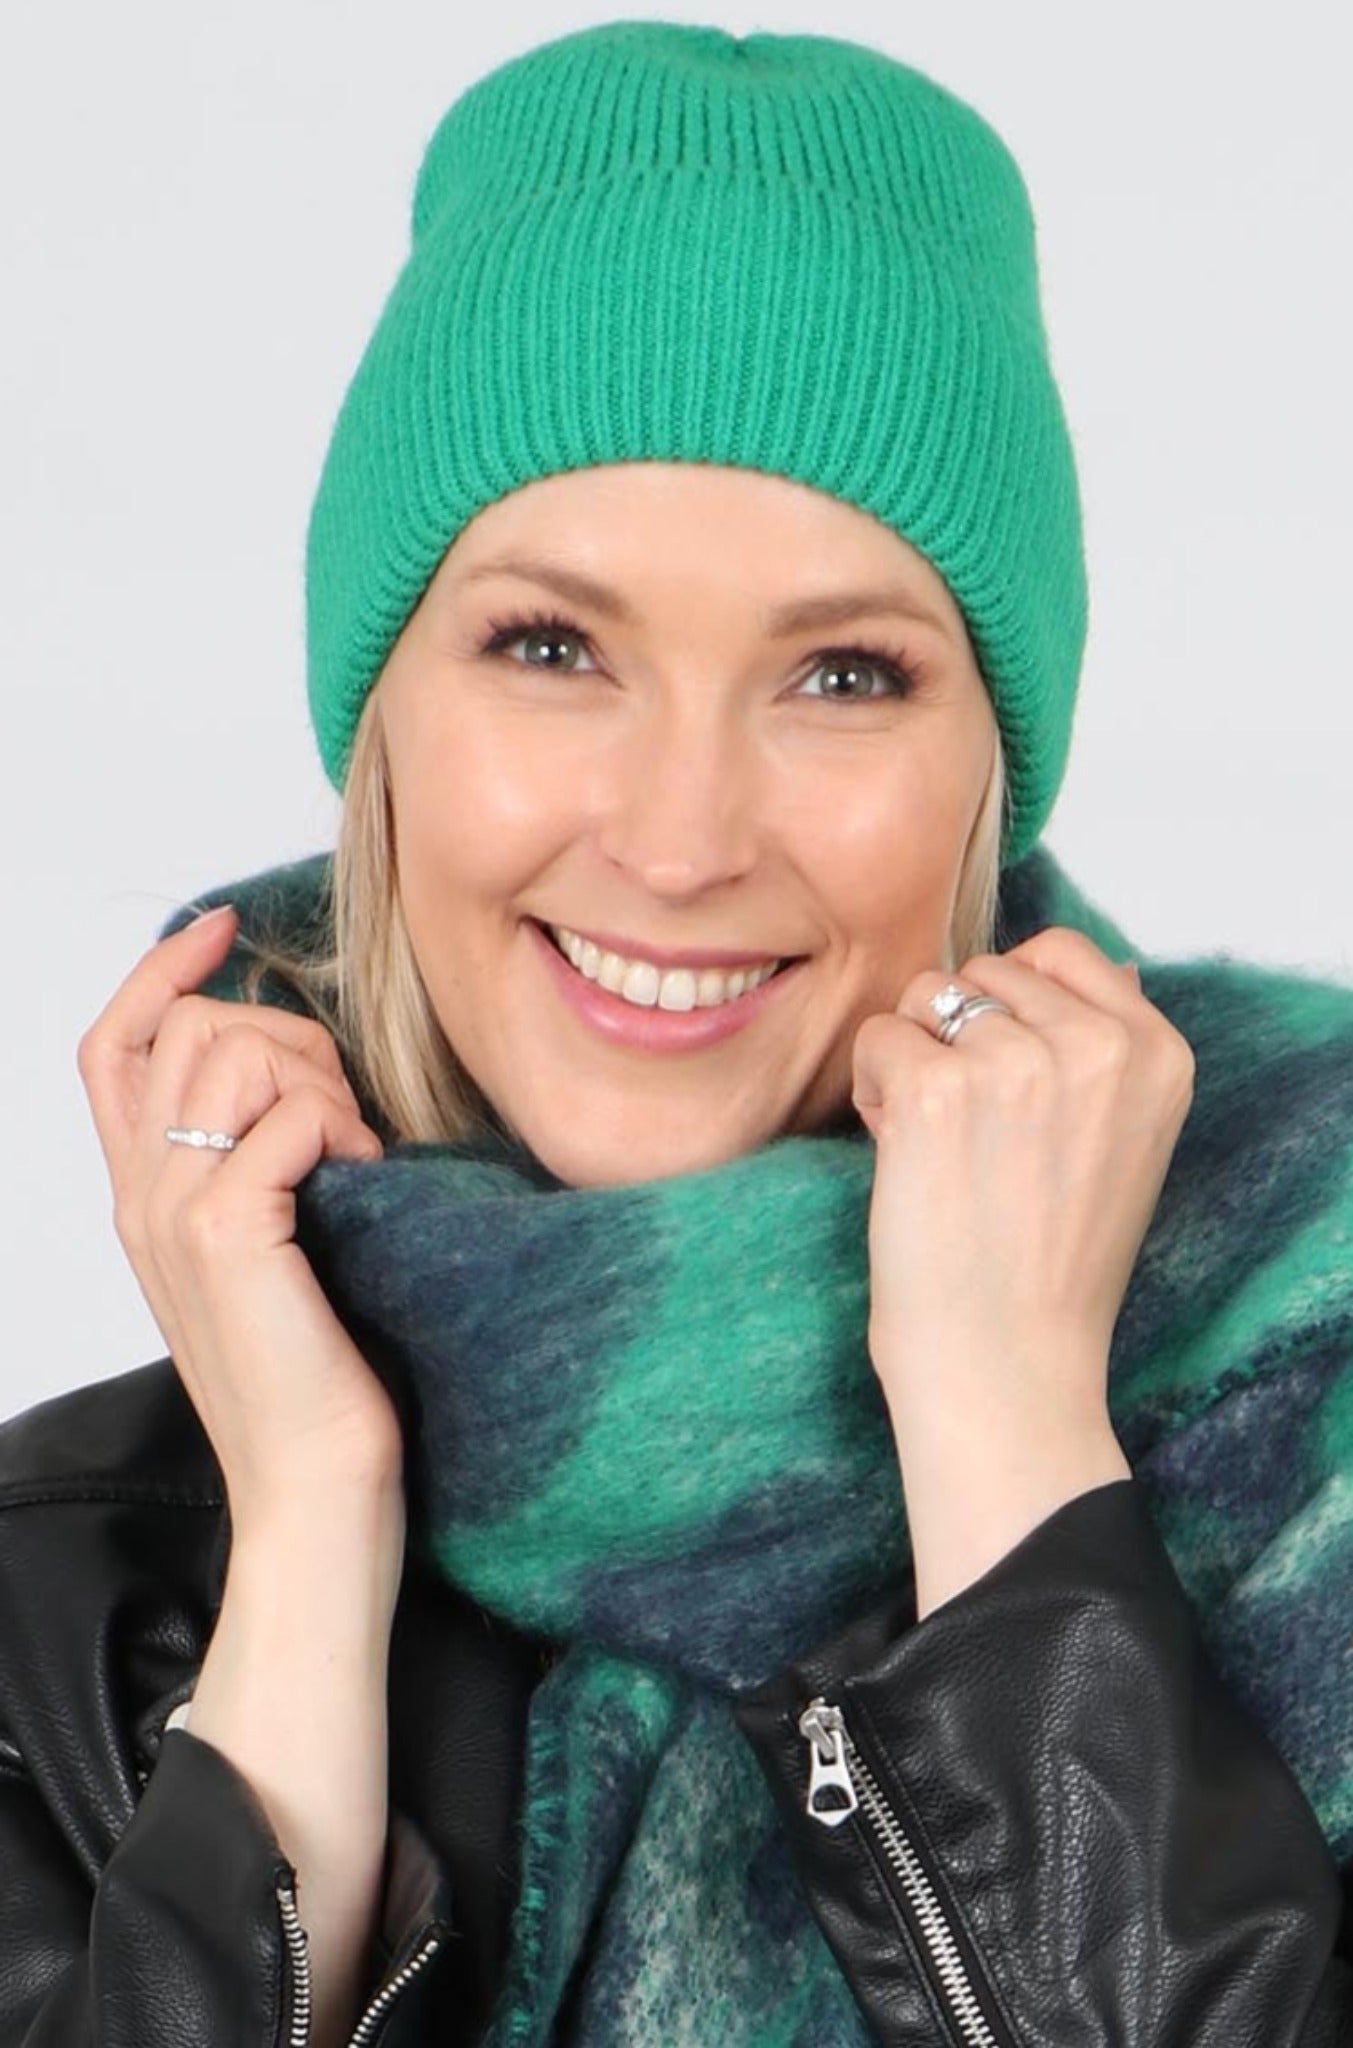 model wearing a plain vibrant green beanie hat